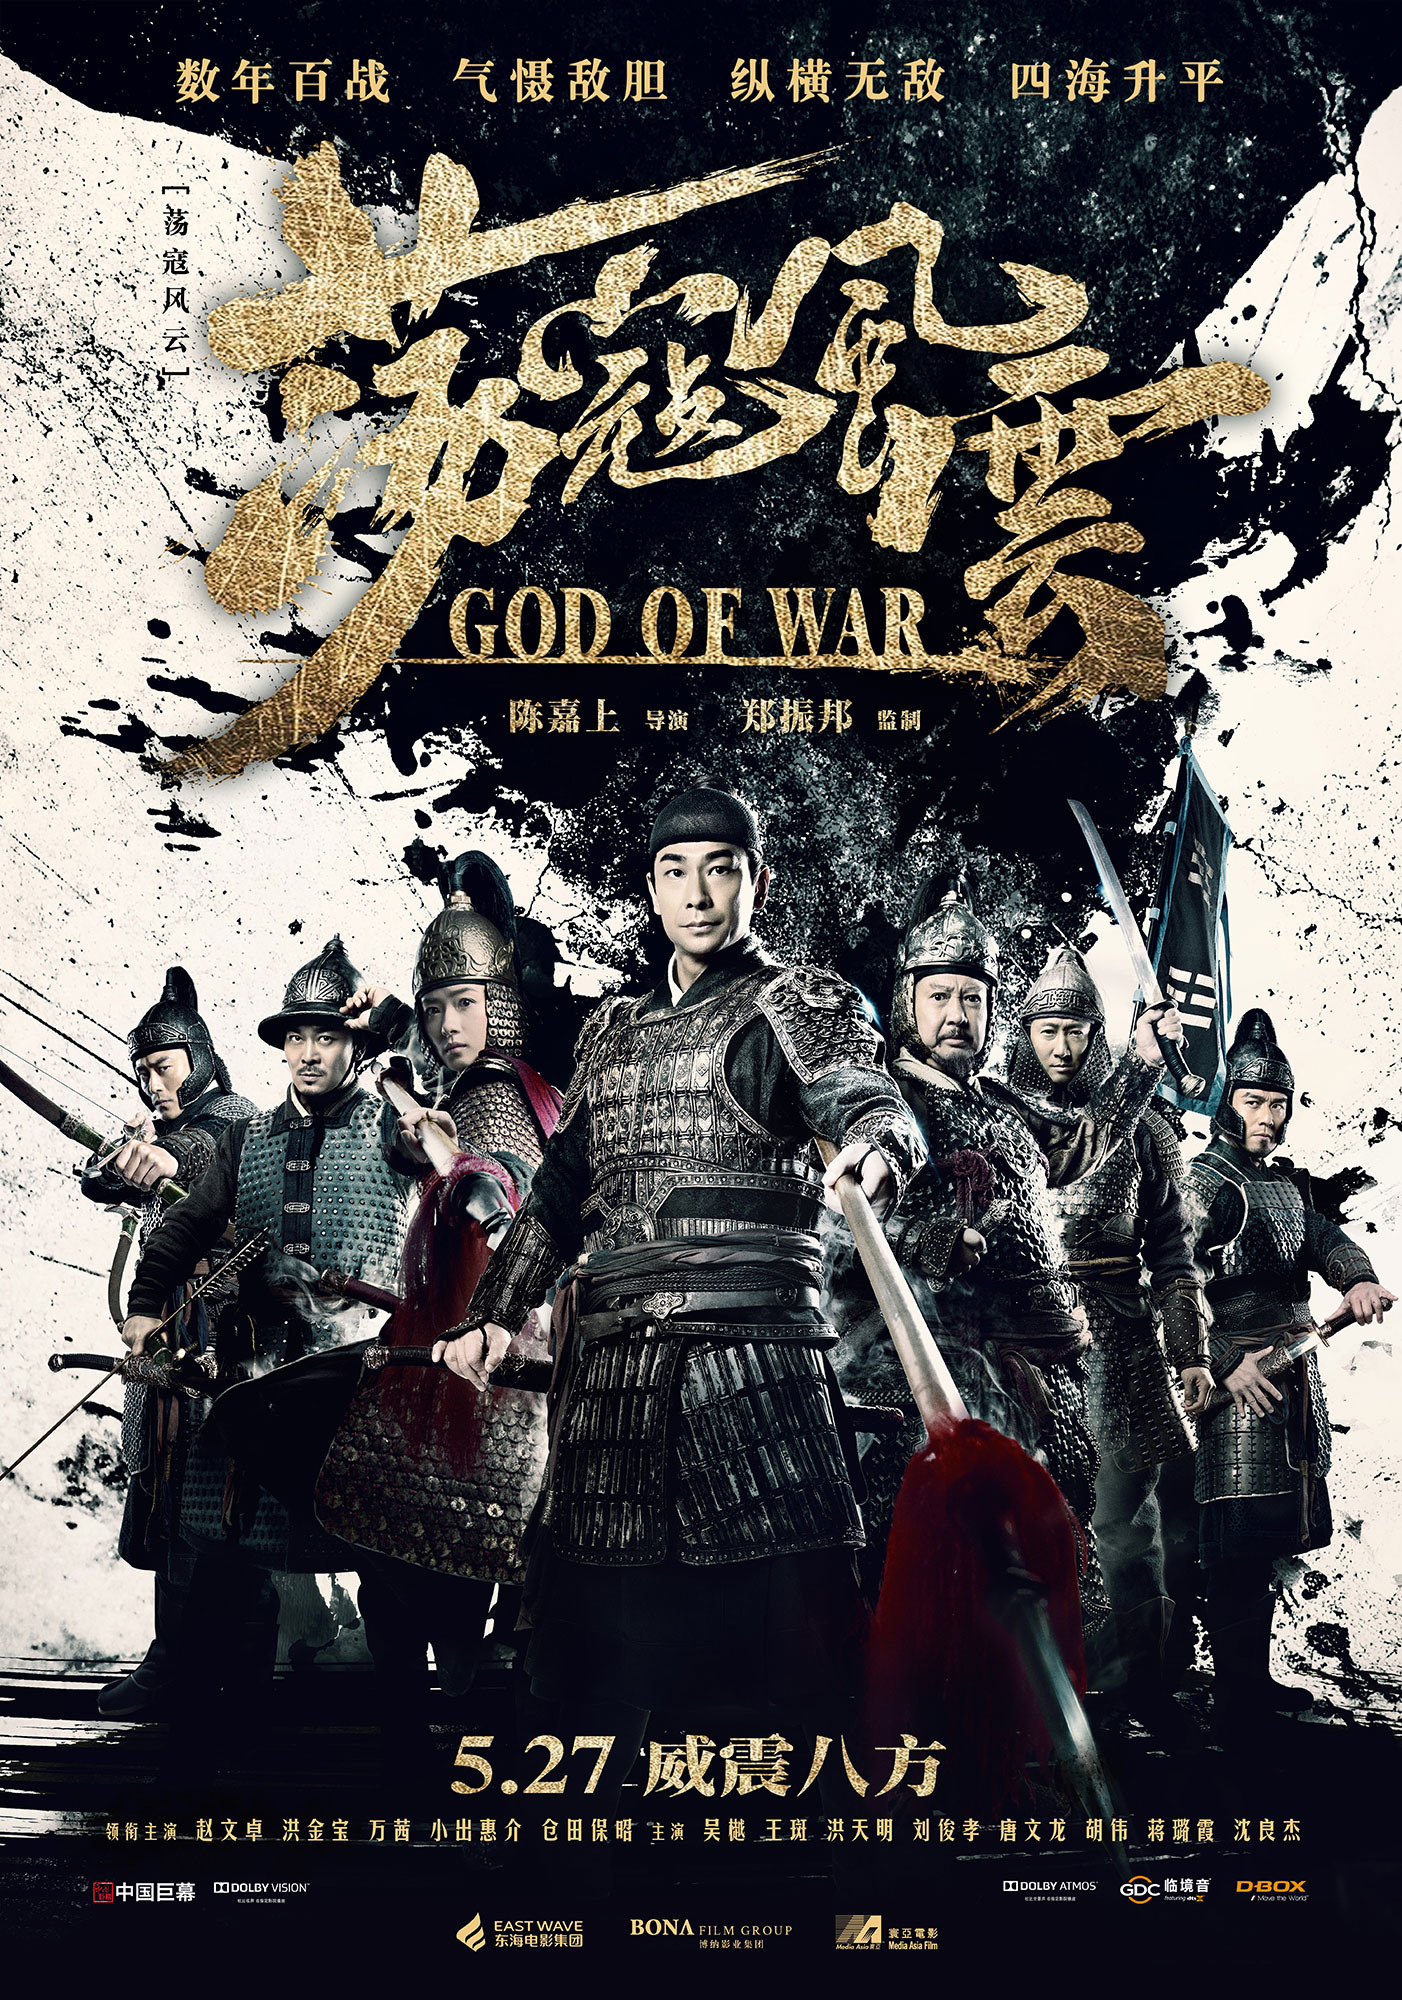 Mega Sized Movie Poster Image for Dang kou feng yun 